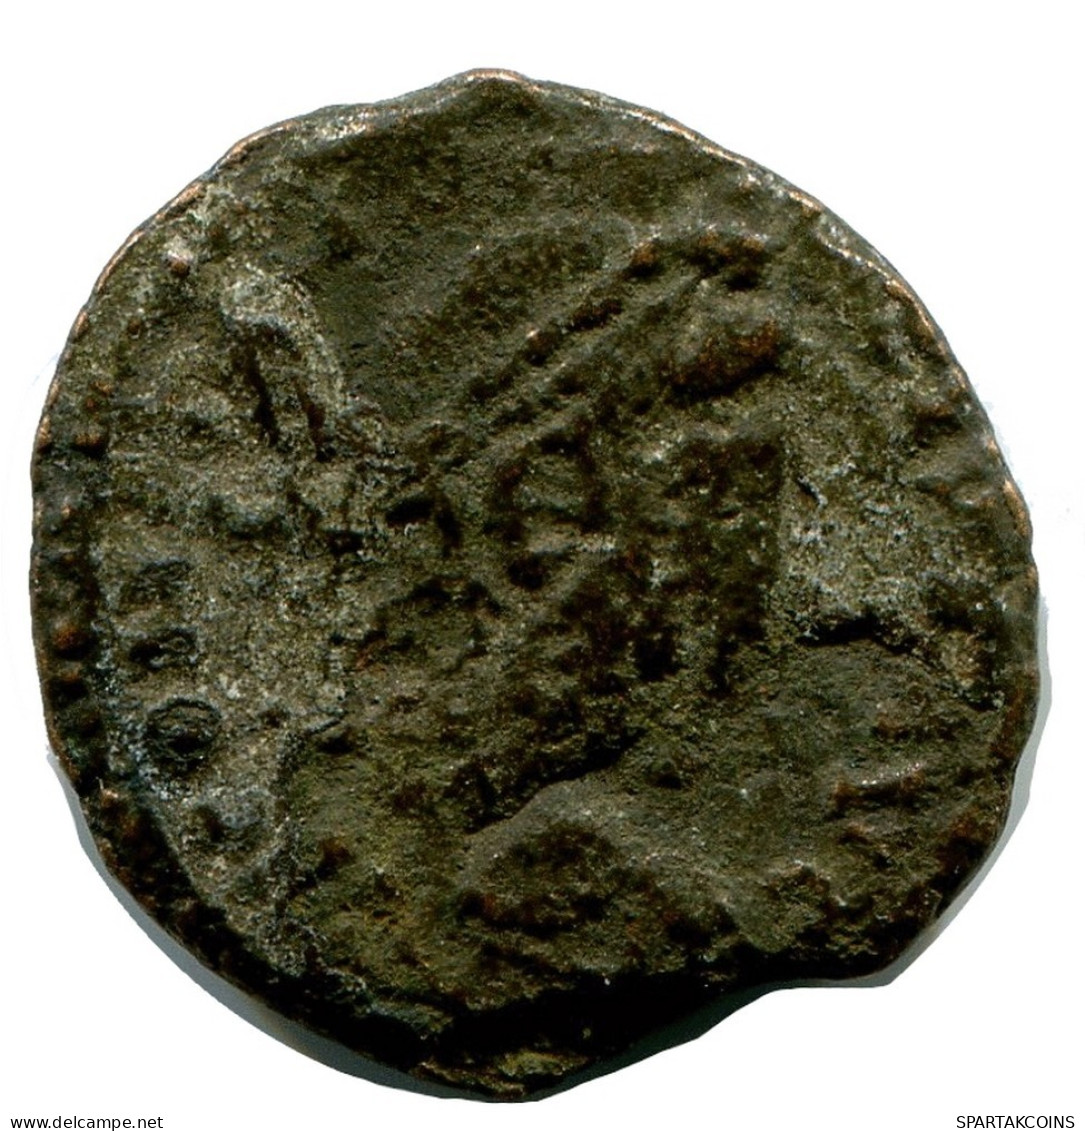 ROMAN Coin MINTED IN ALEKSANDRIA FOUND IN IHNASYAH HOARD EGYPT #ANC10172.14.U.A - El Imperio Christiano (307 / 363)